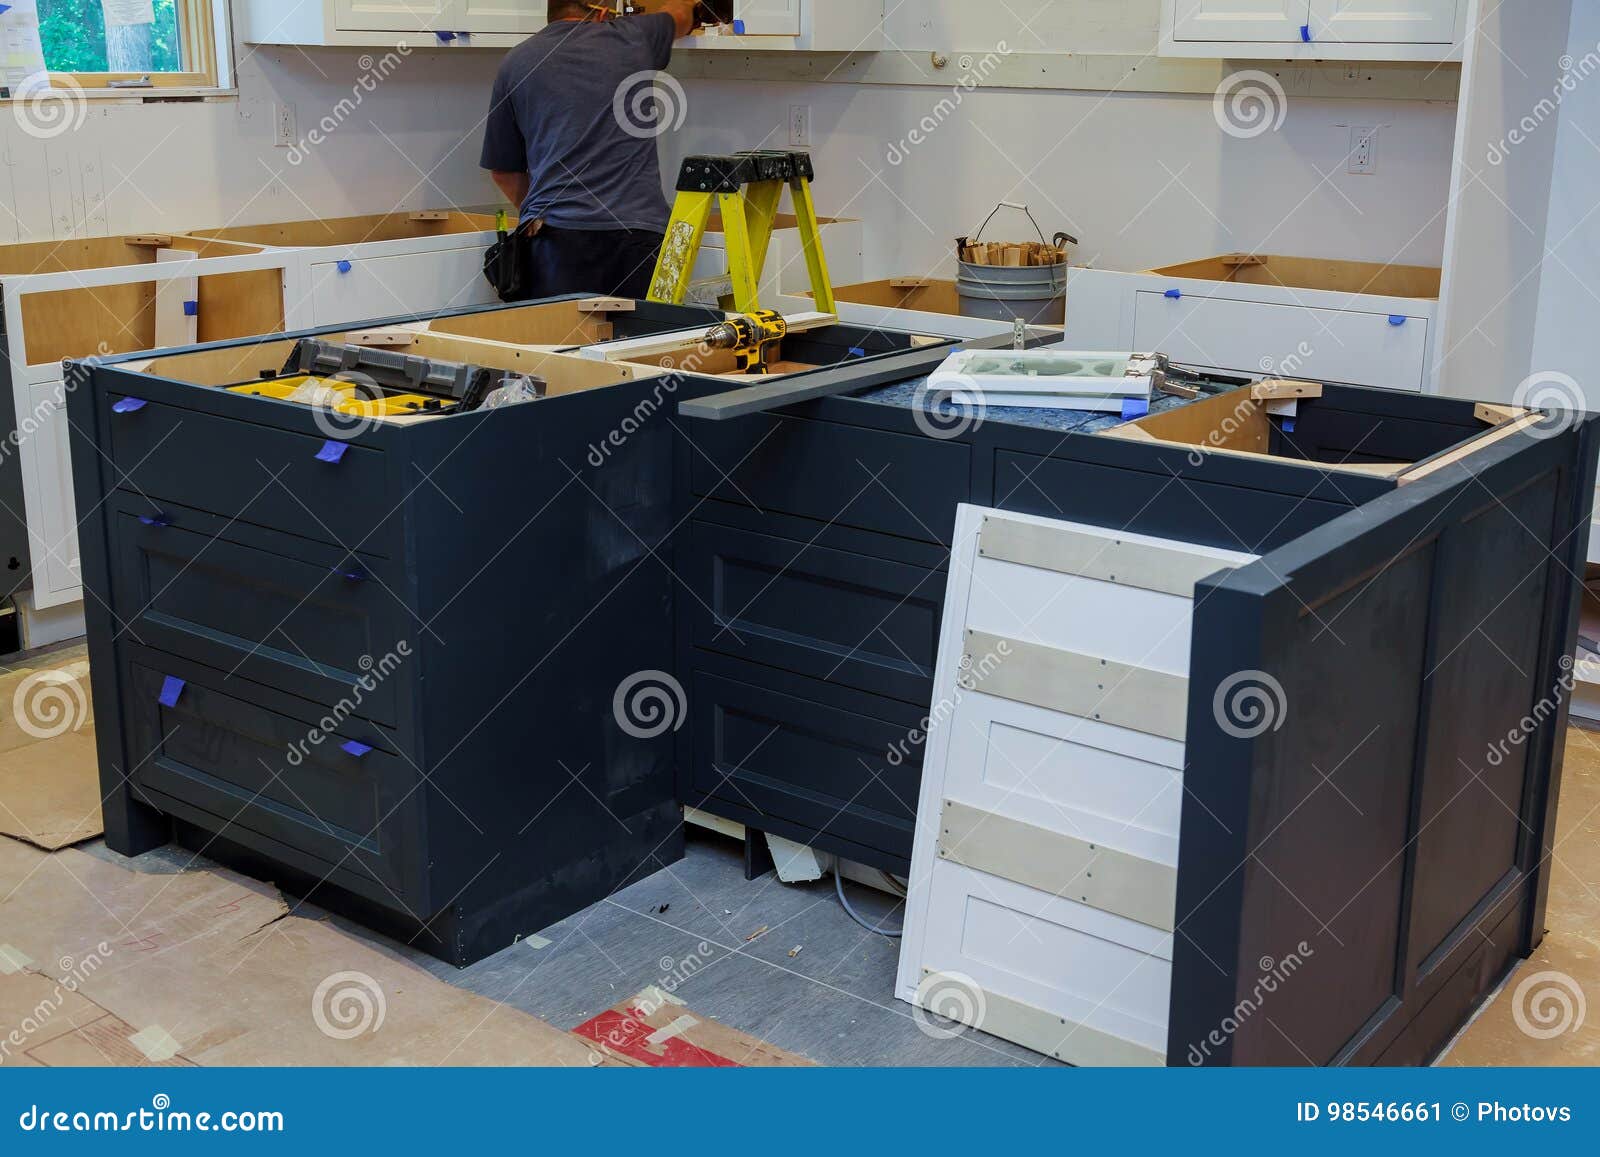 Repair Man In Overalls Repairing Cabinet Hinge In Kitchen Stock